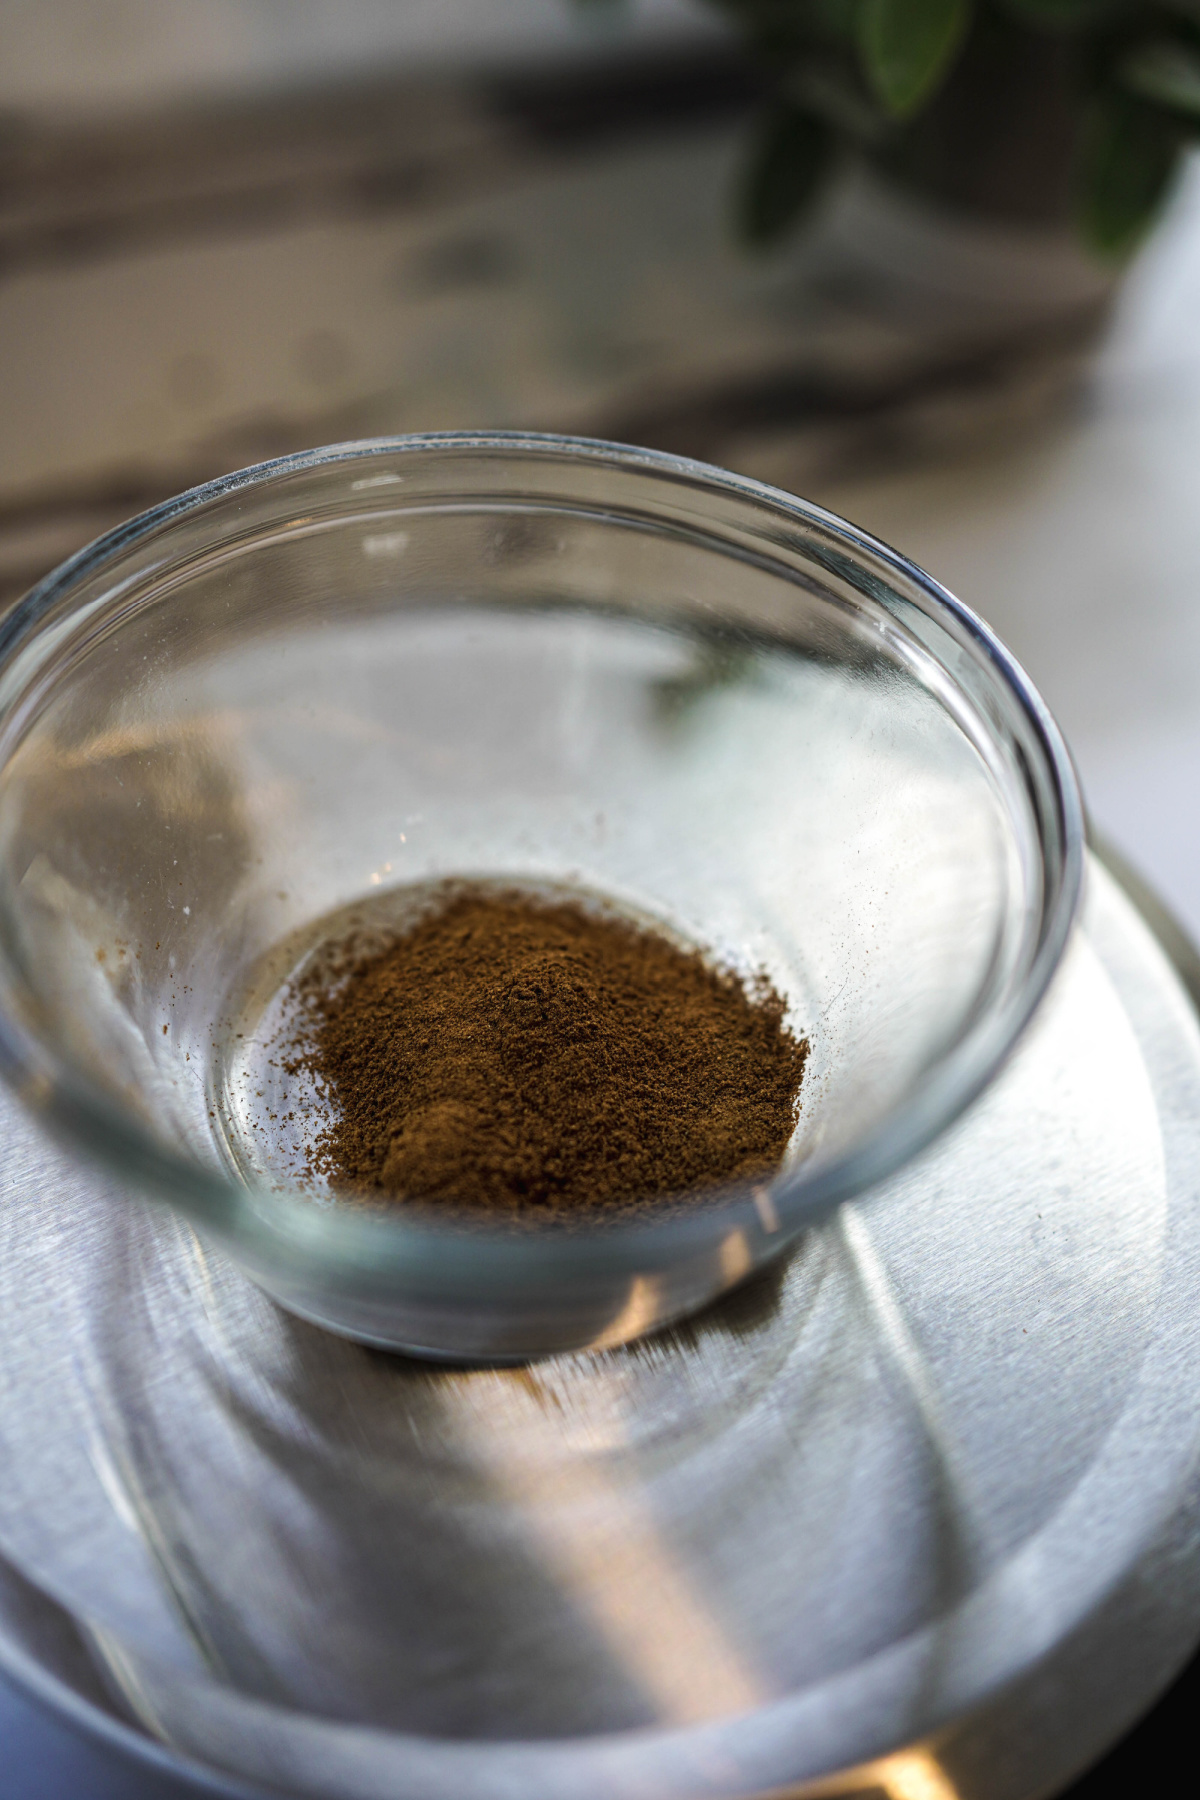 powdered cinnamon in a glass bowl